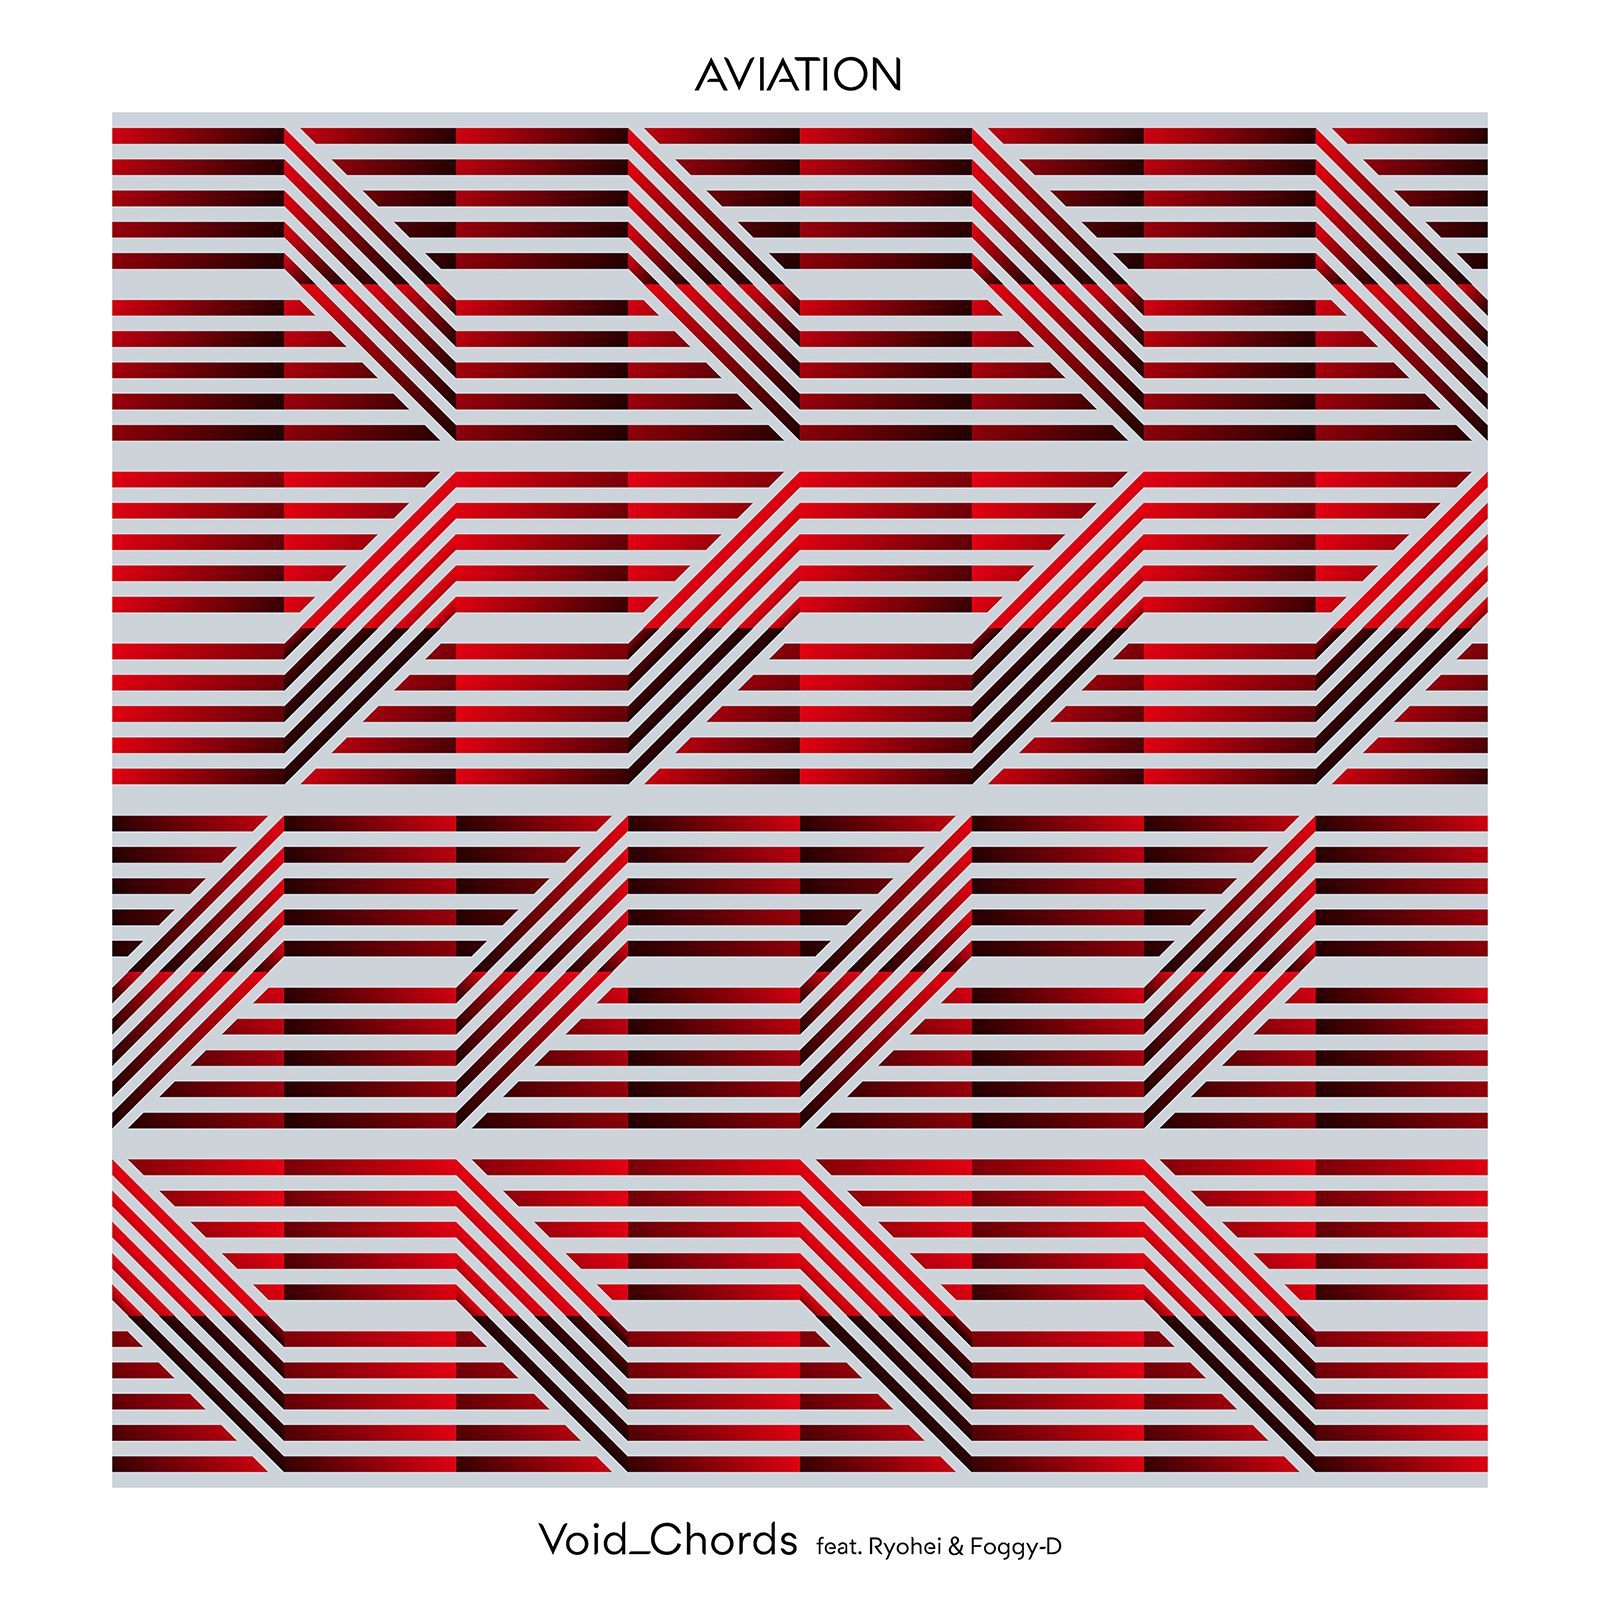 Void_Chords feat. Ryohei & Foggy-D - AVIATION